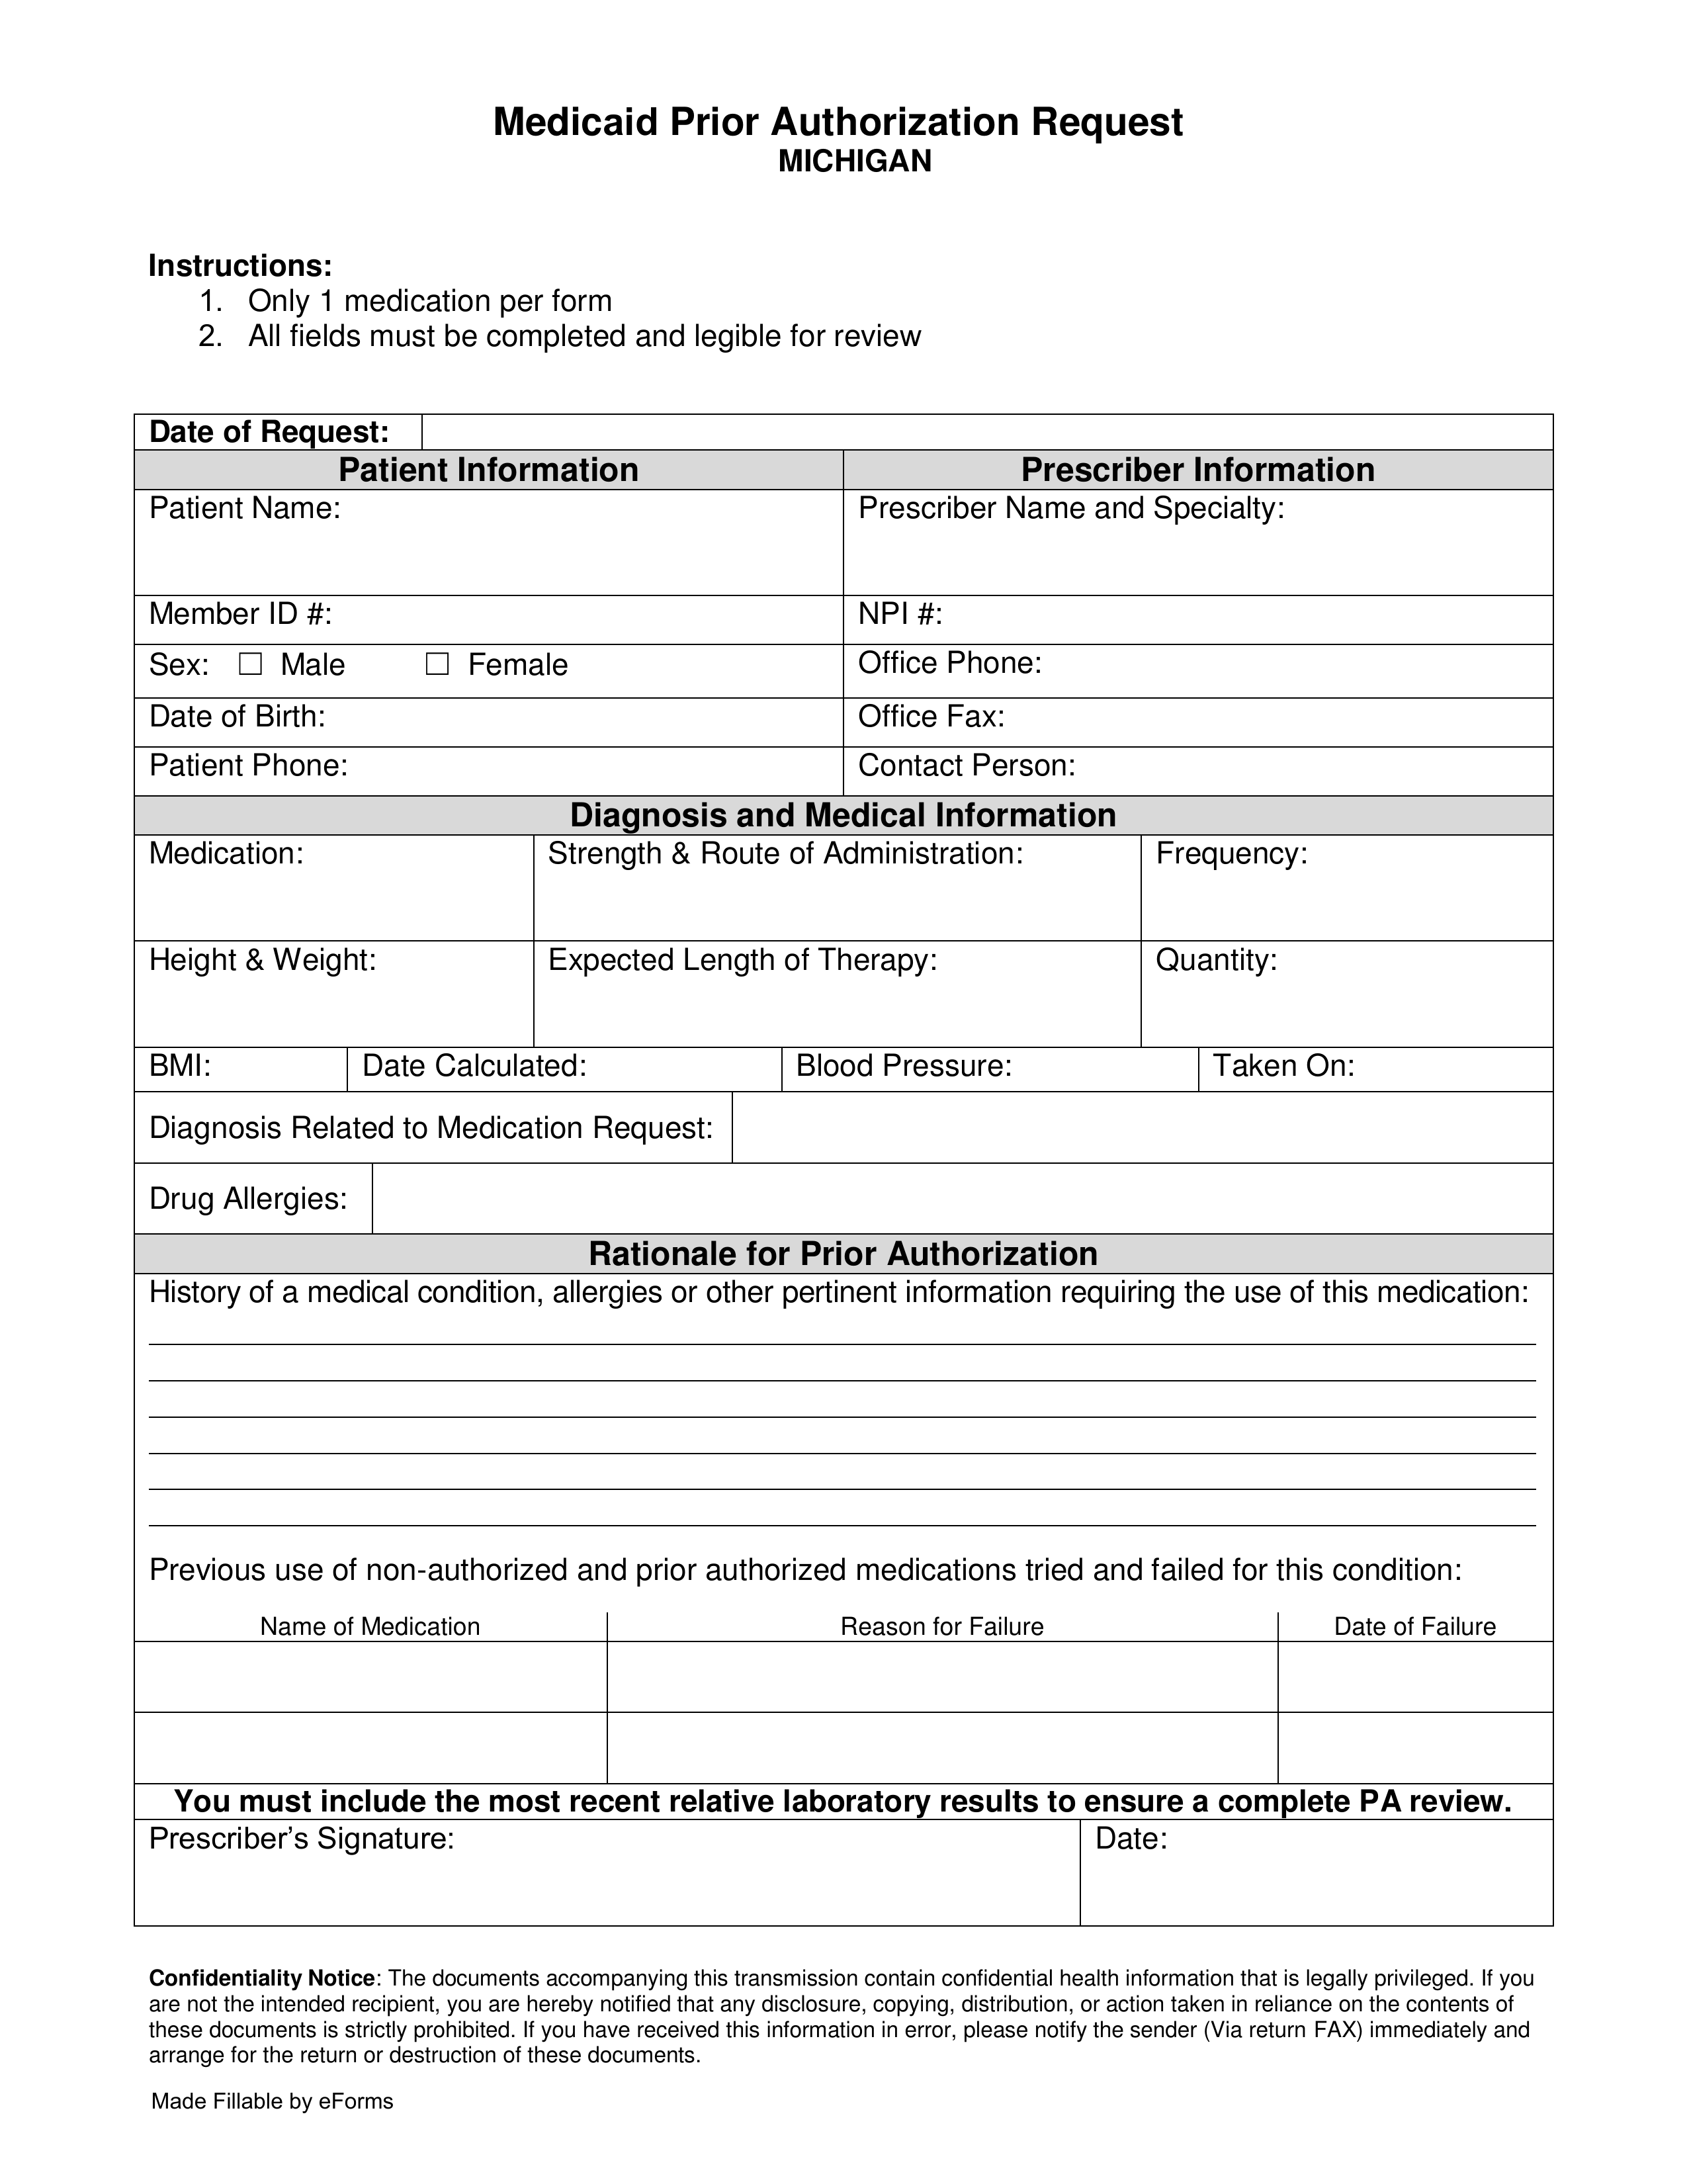 Michigan Medicaid Prior (Rx) Authorization Form